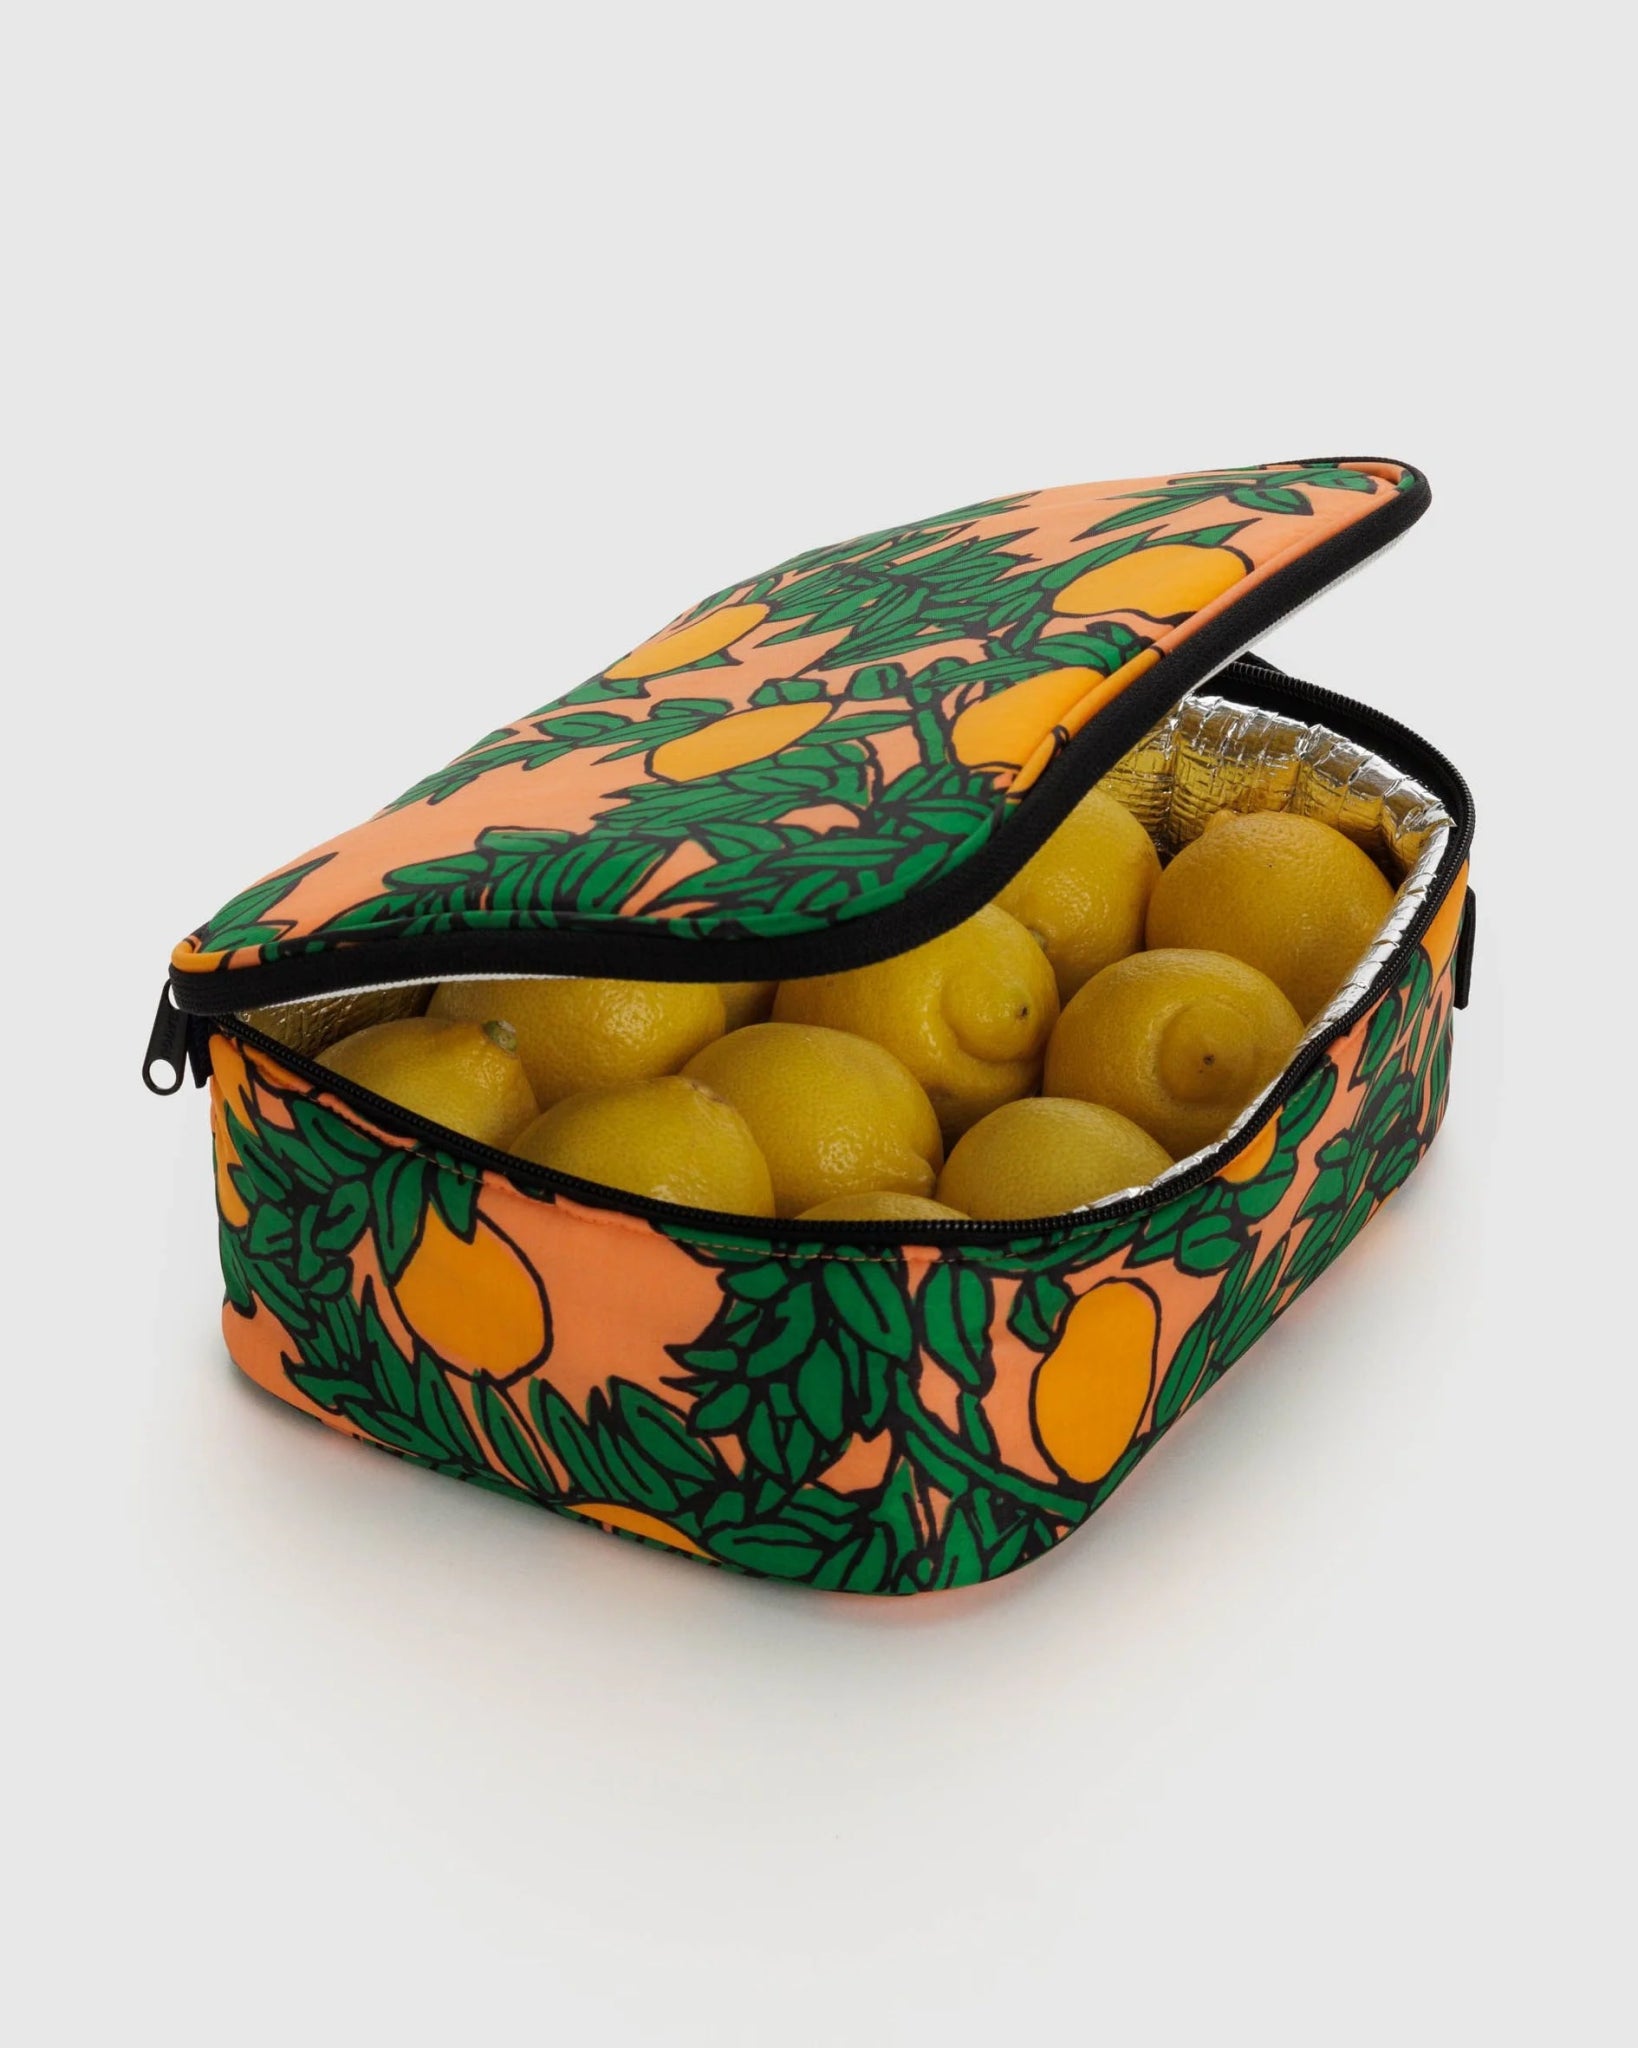 Baggu - Puffy Lunch Box - Orange Tree Coral - Ensemble Studios